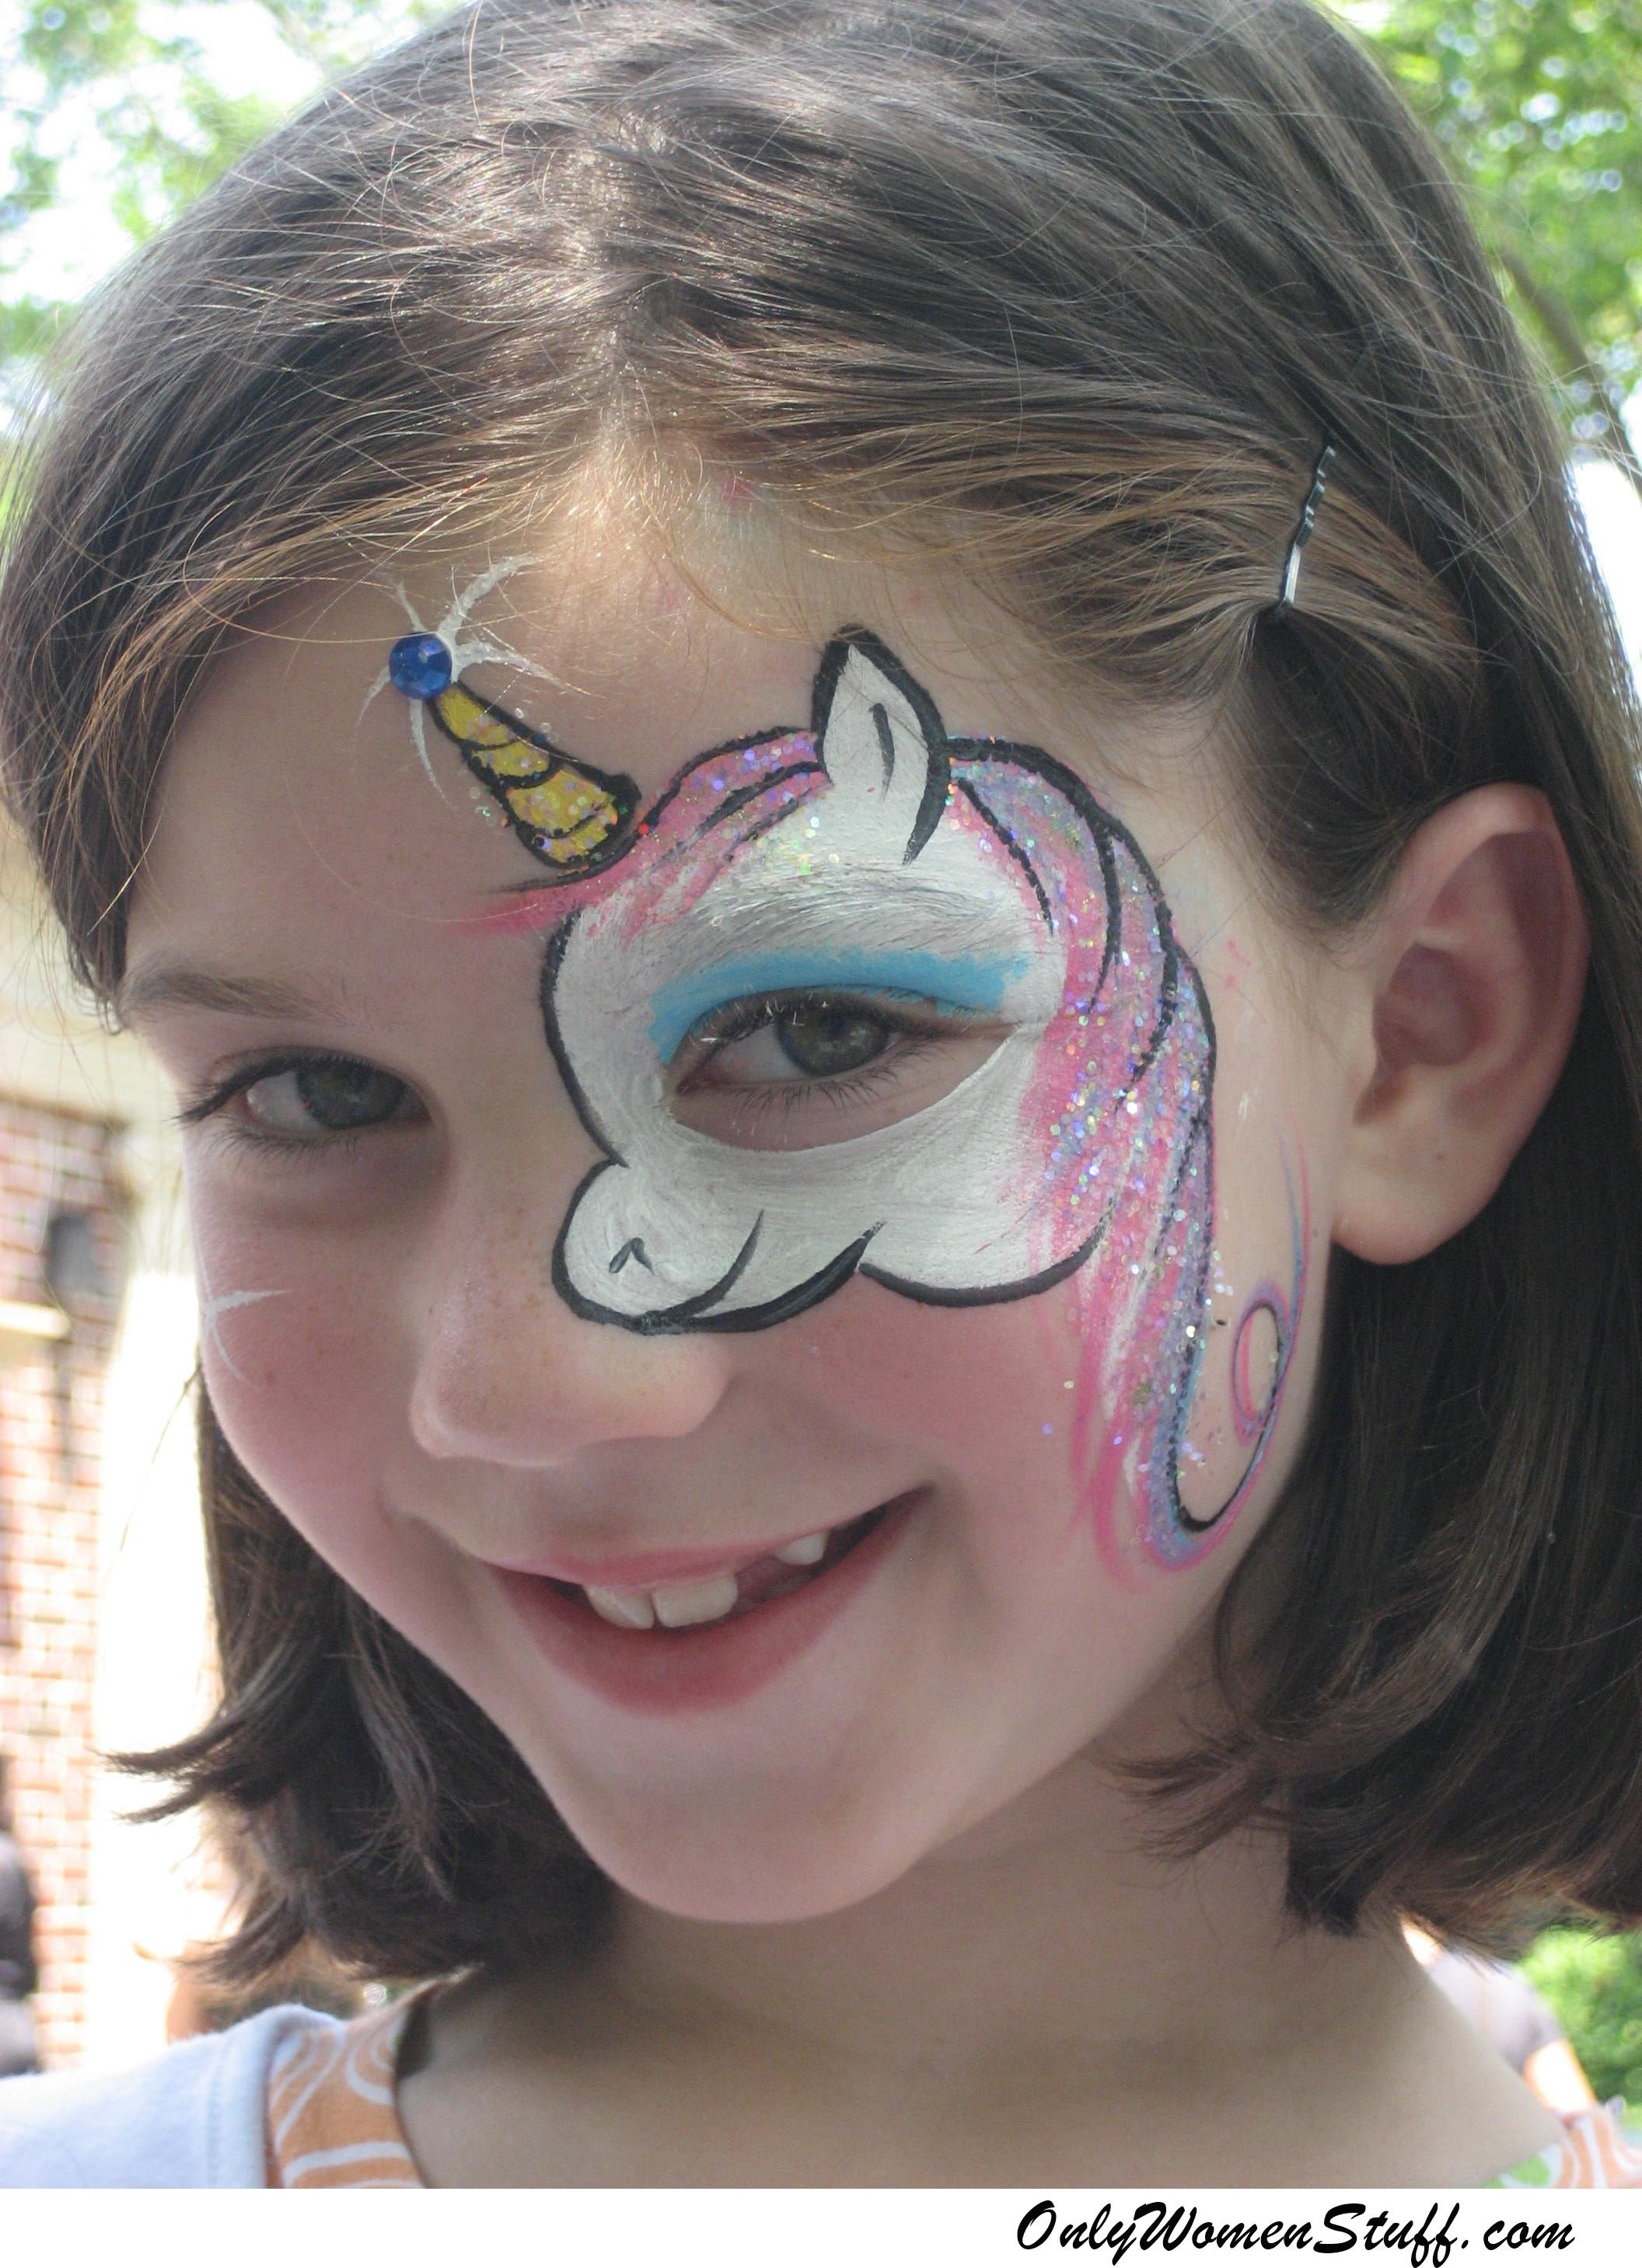 10 Lovely Face Paint Ideas For Girls 40 easy kids face painting ideas designs for little girls 1 2022